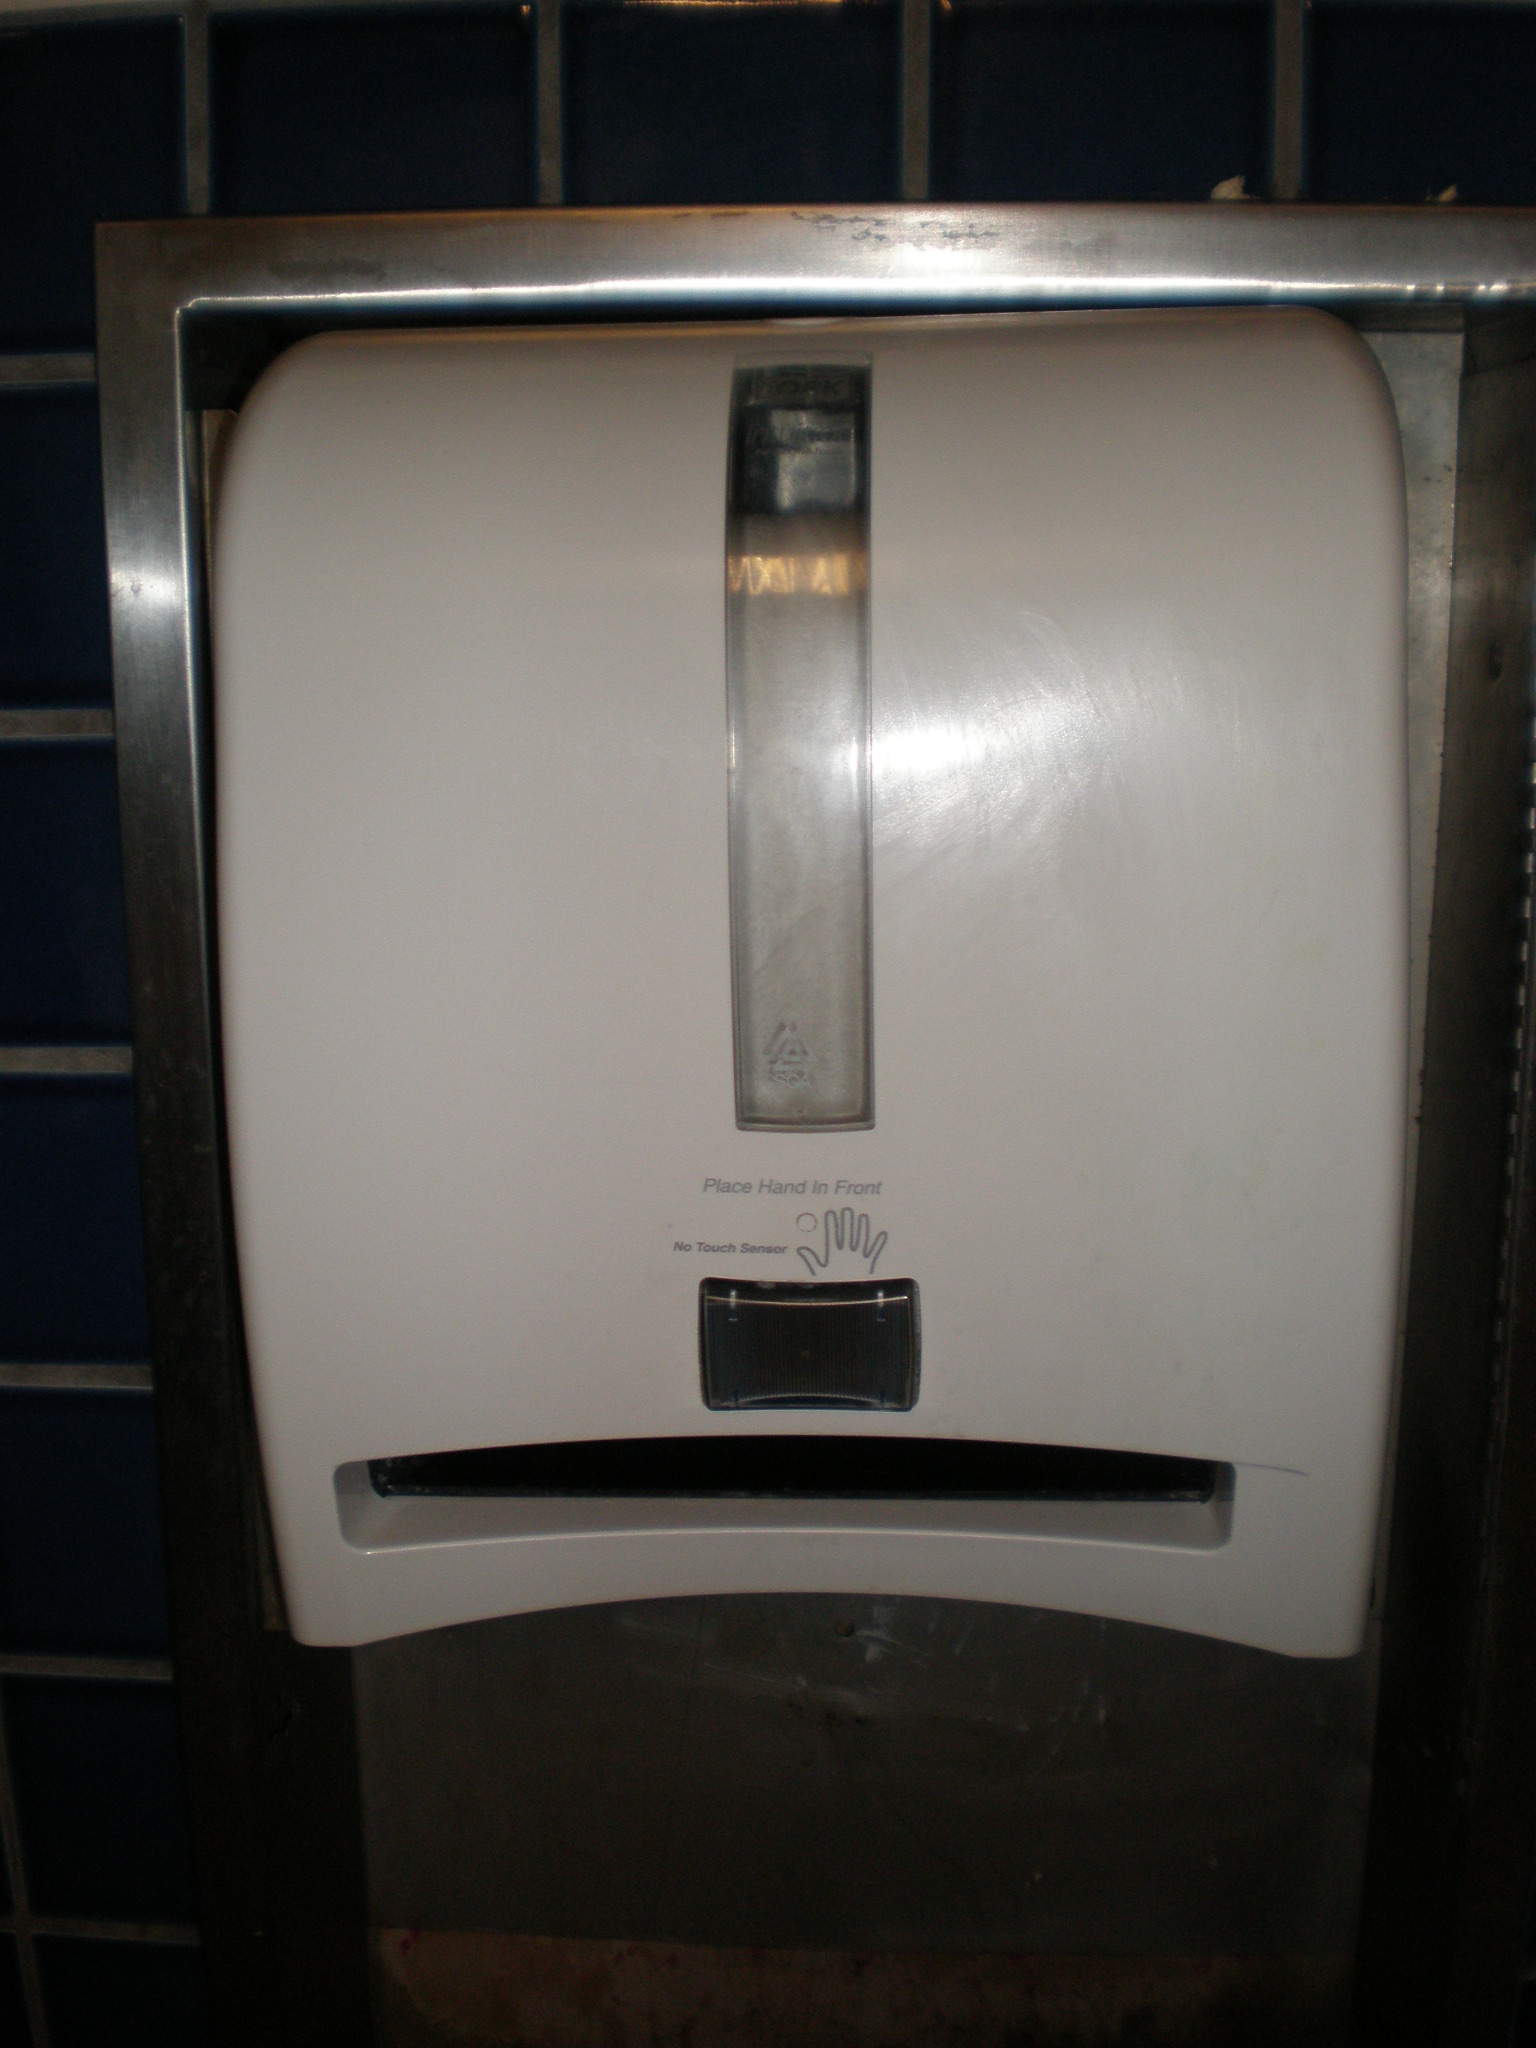 File:Tork Intuition paper towel dispenser.JPG - Wikimedia Commons